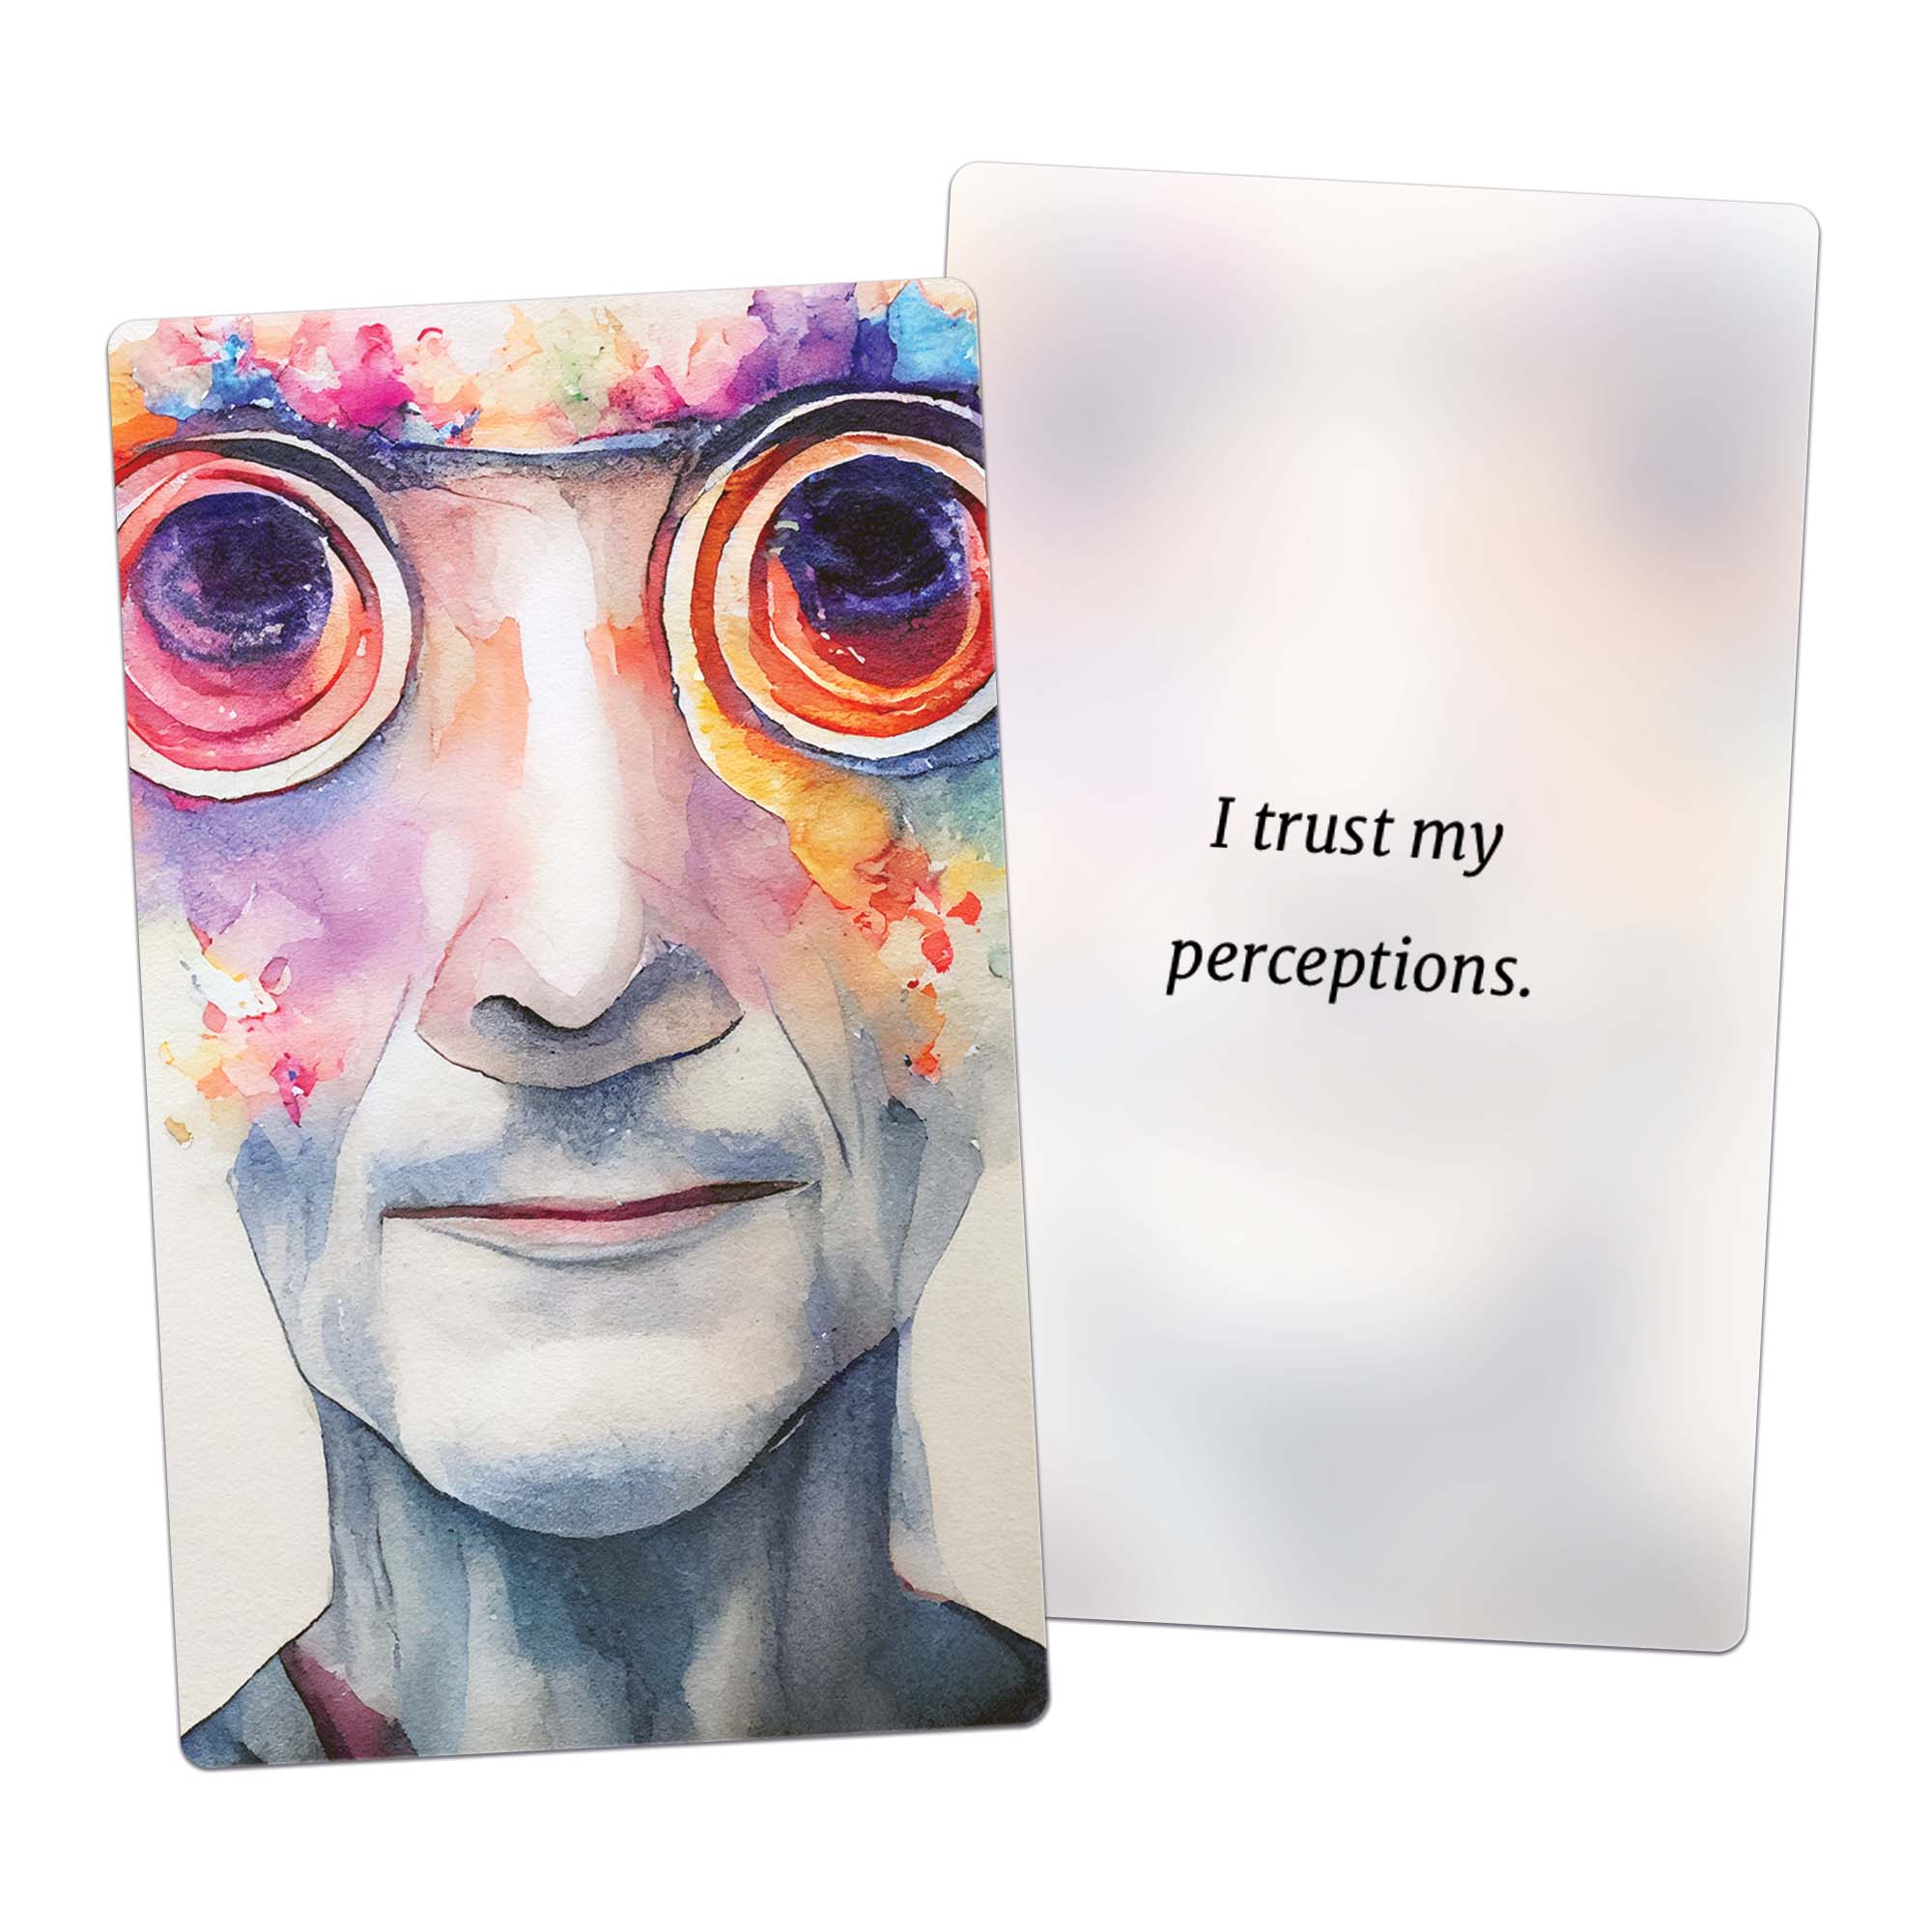 I trust my perceptions. (AFFIRMATION CARD)